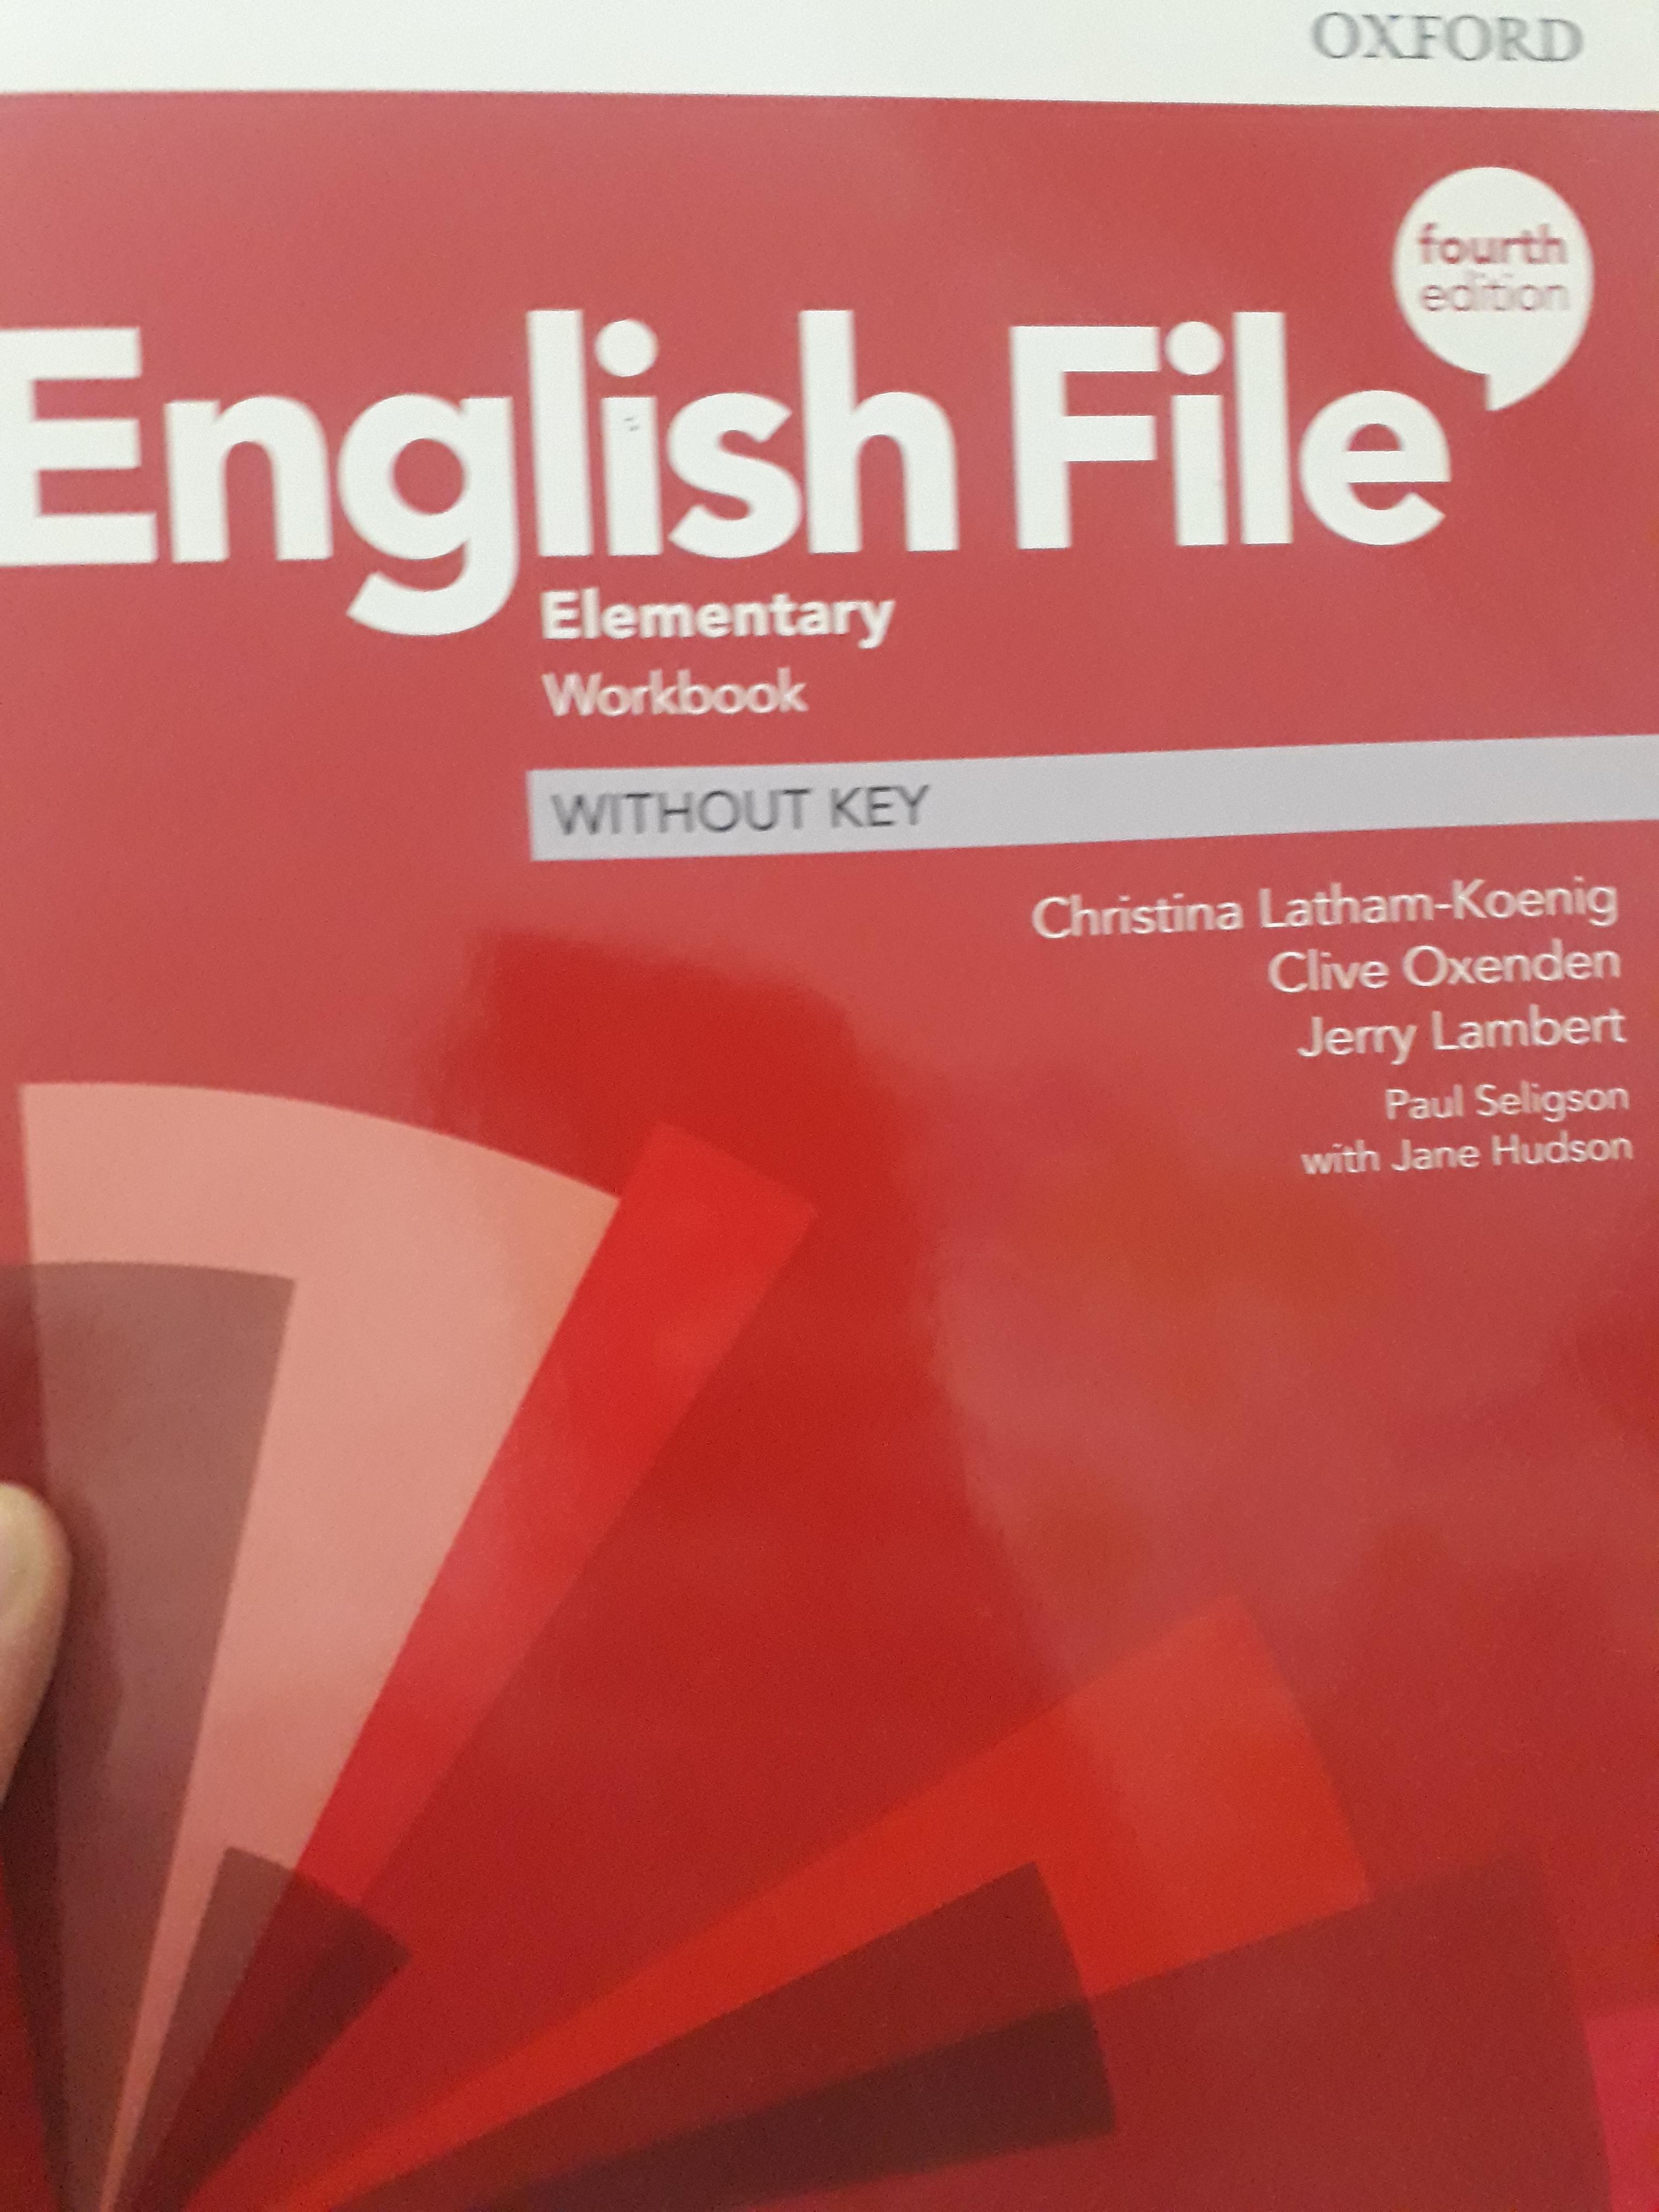 Elementary workbook key. English file Elementary 4th Edition уровень. English file Elementary Workbook 4th Edition. English file Elementary 4th Edition Audio. English file Elementary Workbook fourth Edition.